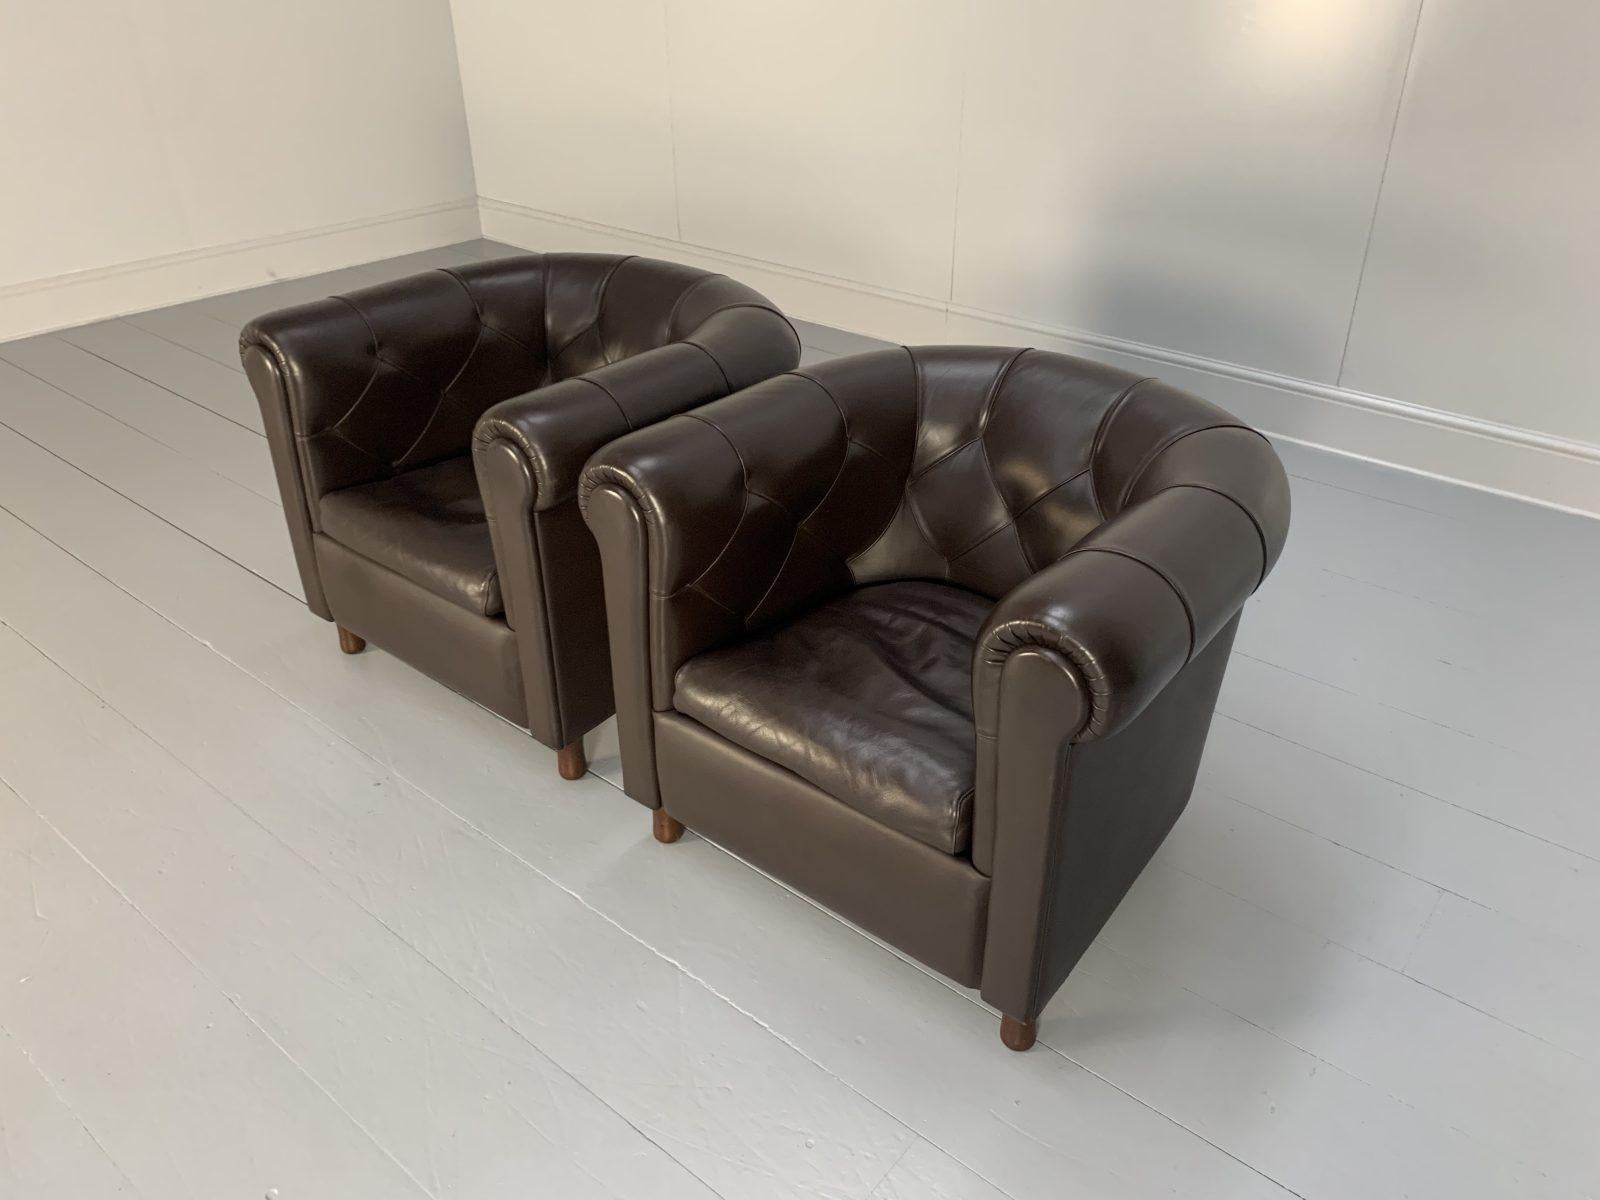 2 Poltrona Frau “Arcadia” Armchairs, in “Pelle Frau” Dark Brown Leather For Sale 1